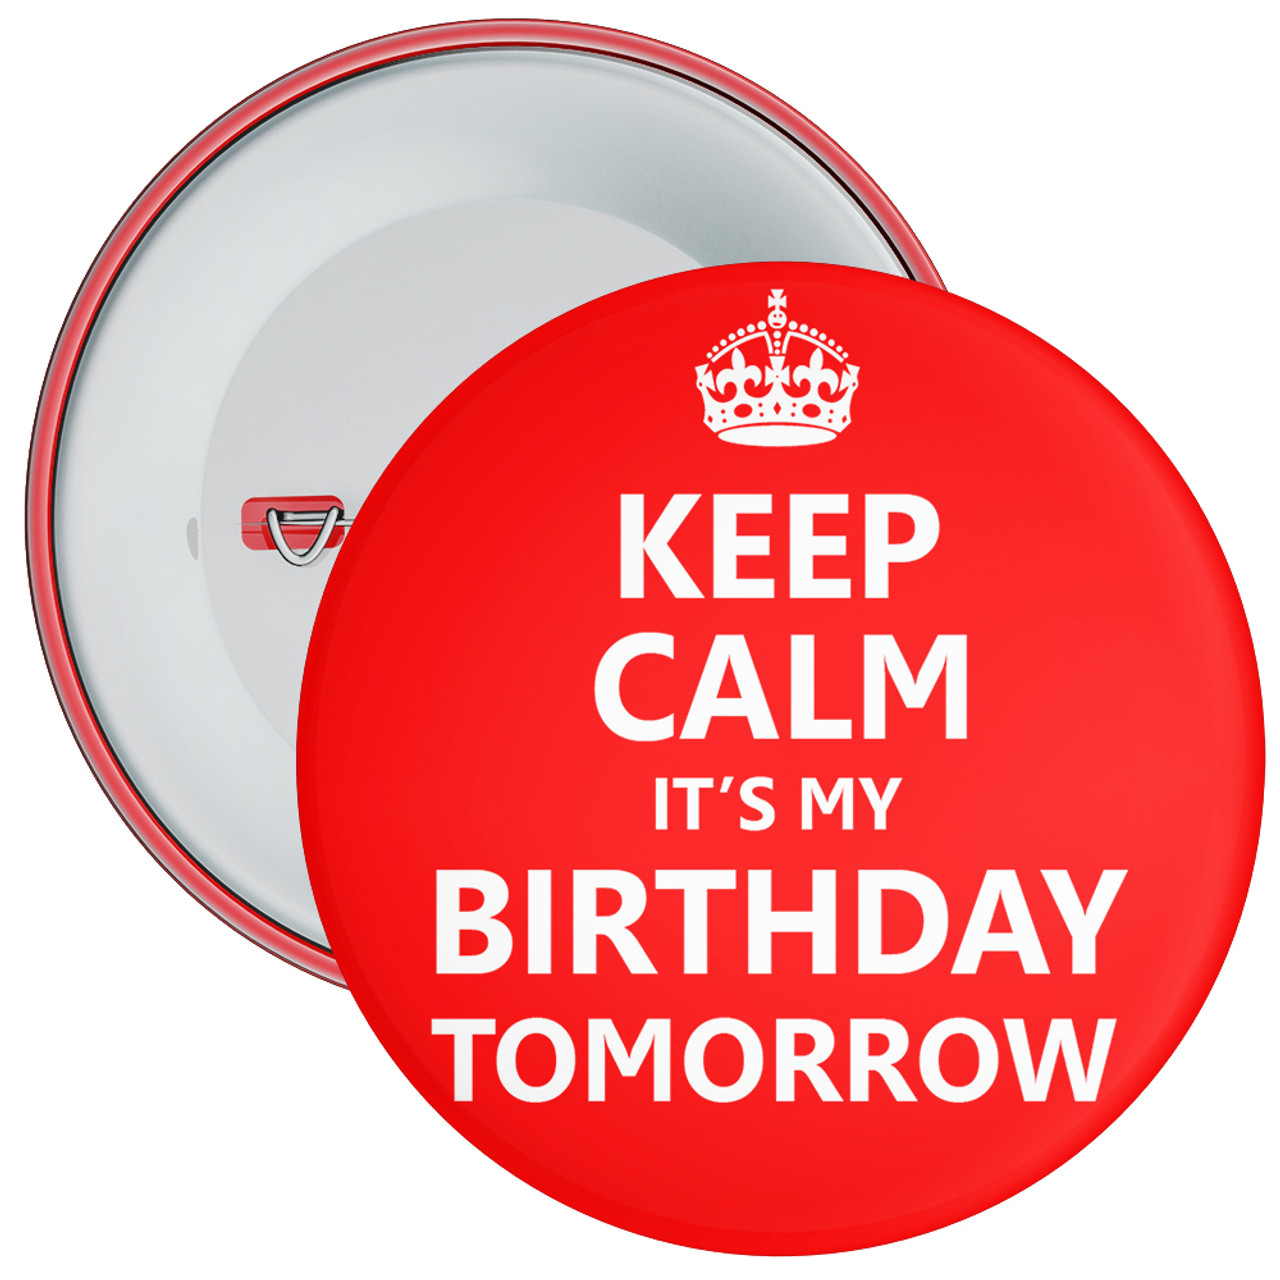 Keep Calm It's My Birthday Tomorrow Badge - The Badge Centre ®